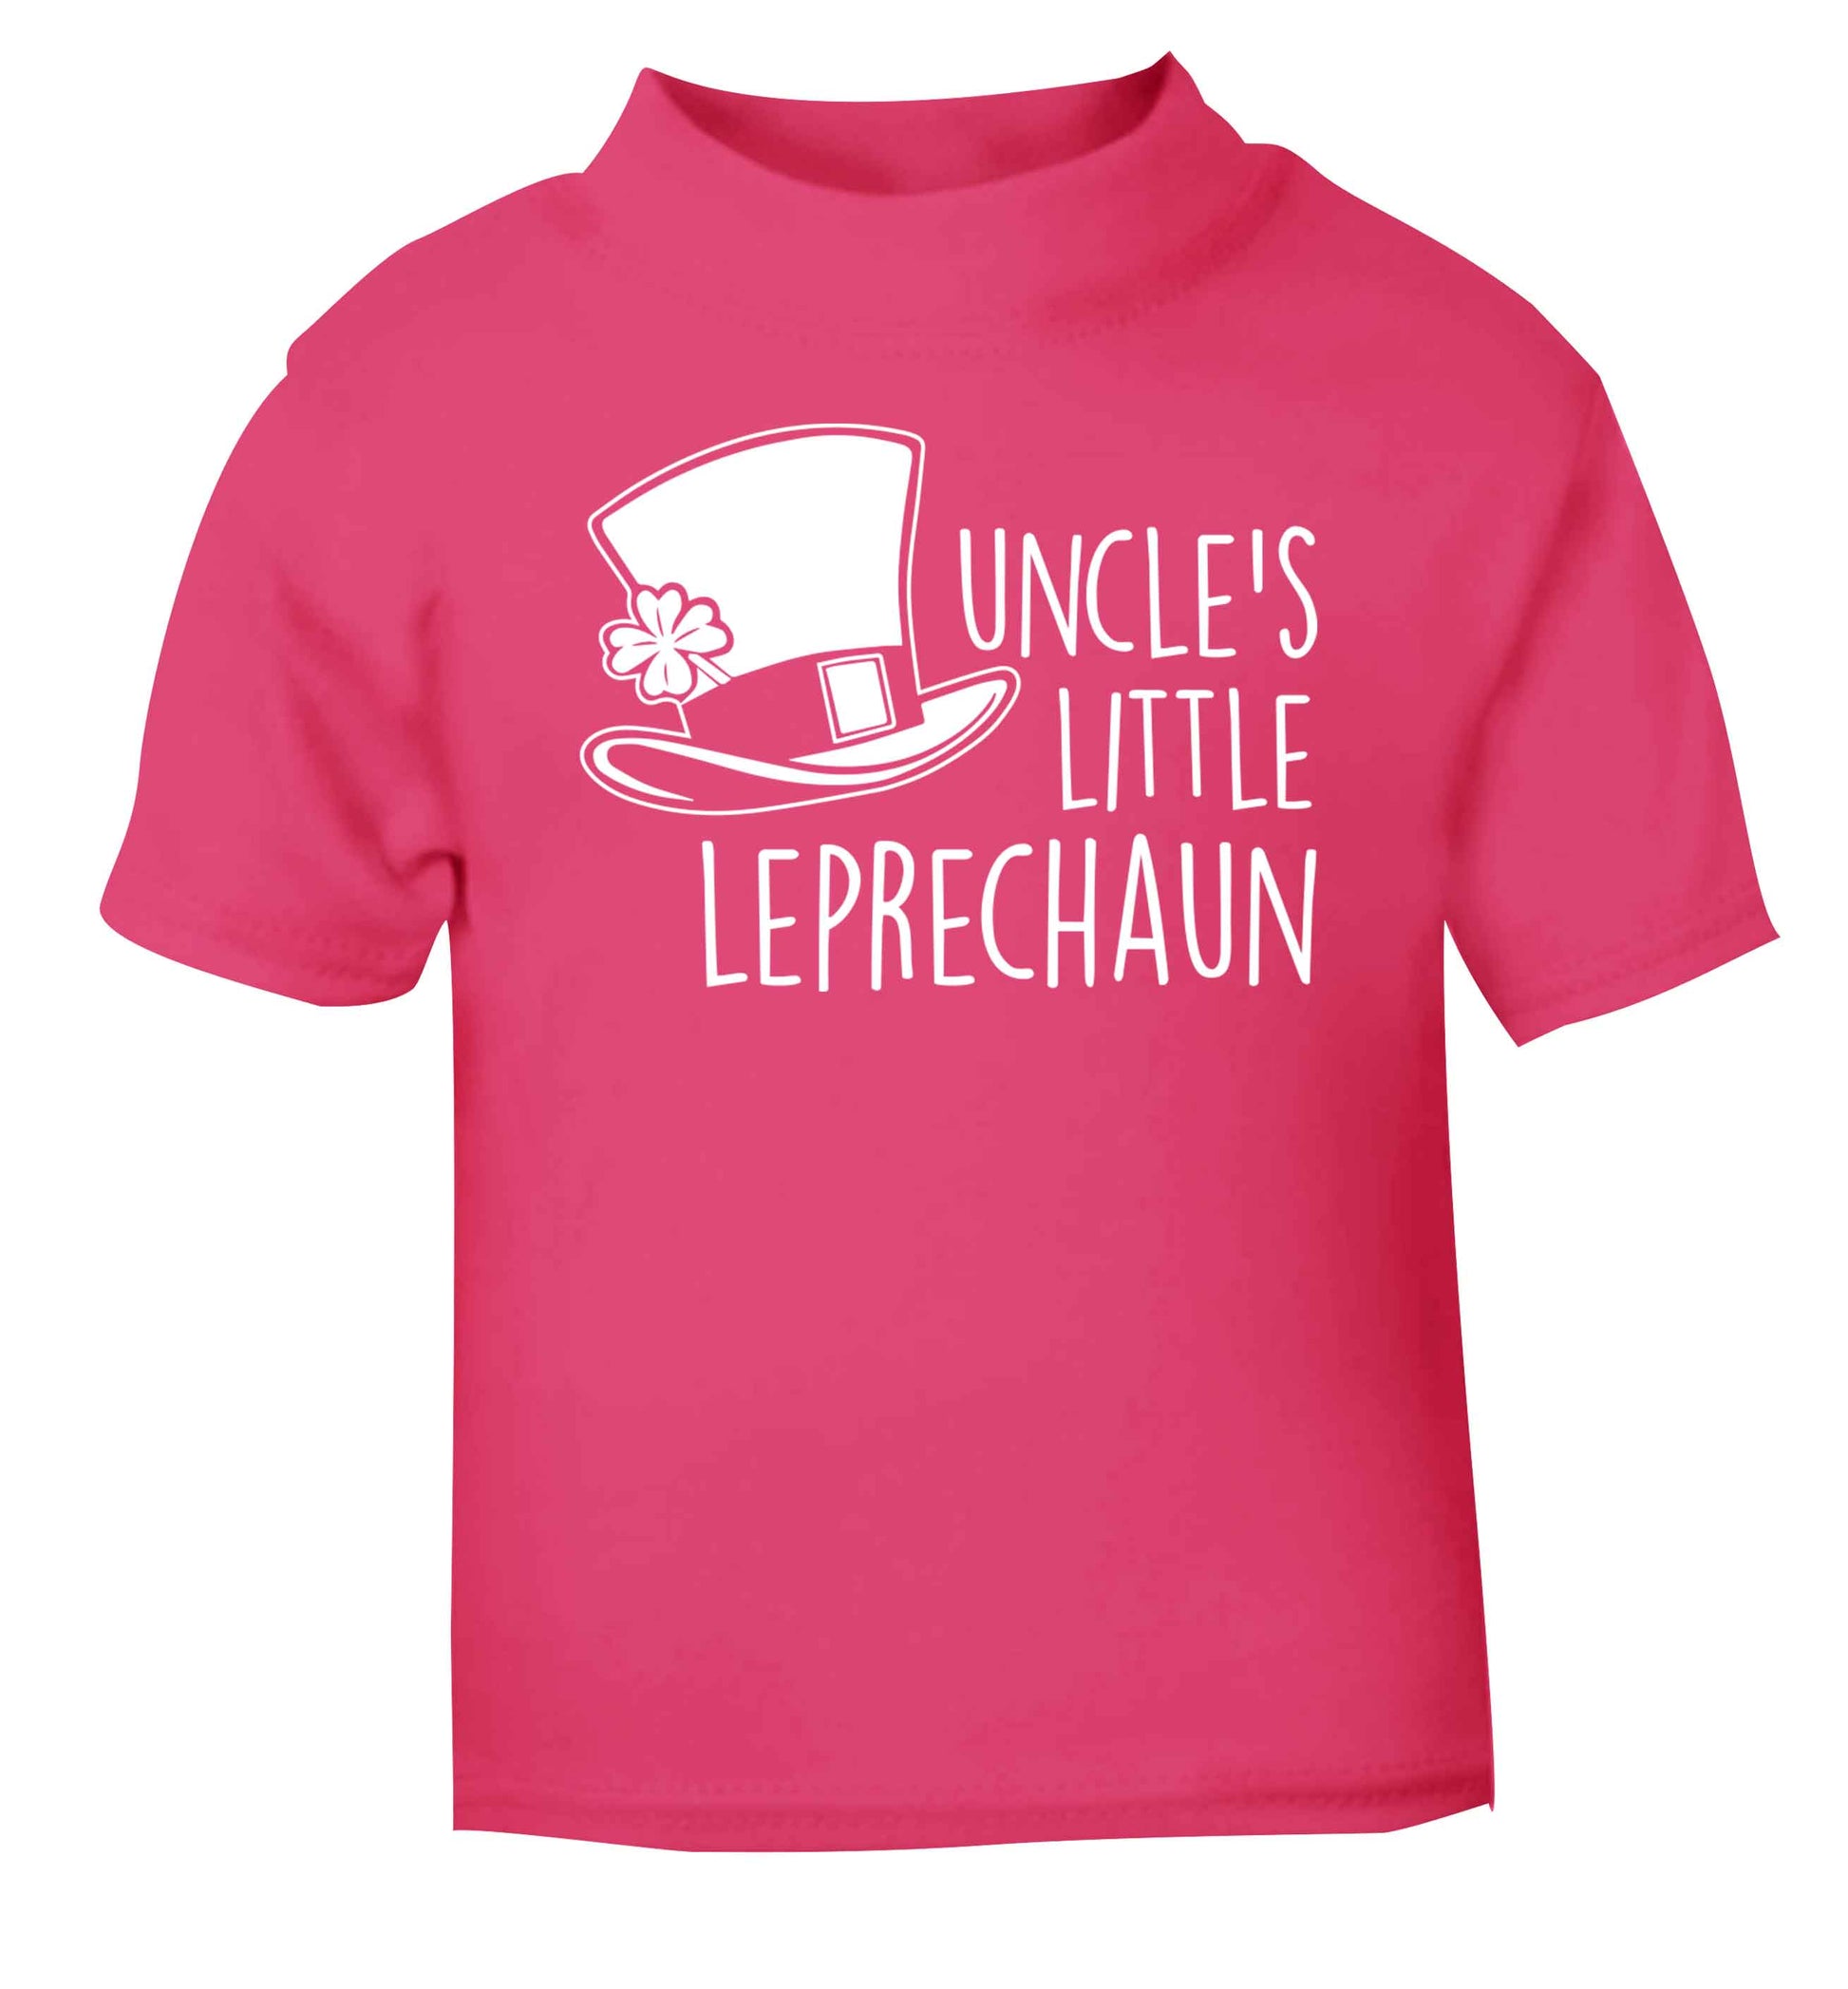 Uncles little leprechaun pink baby toddler Tshirt 2 Years